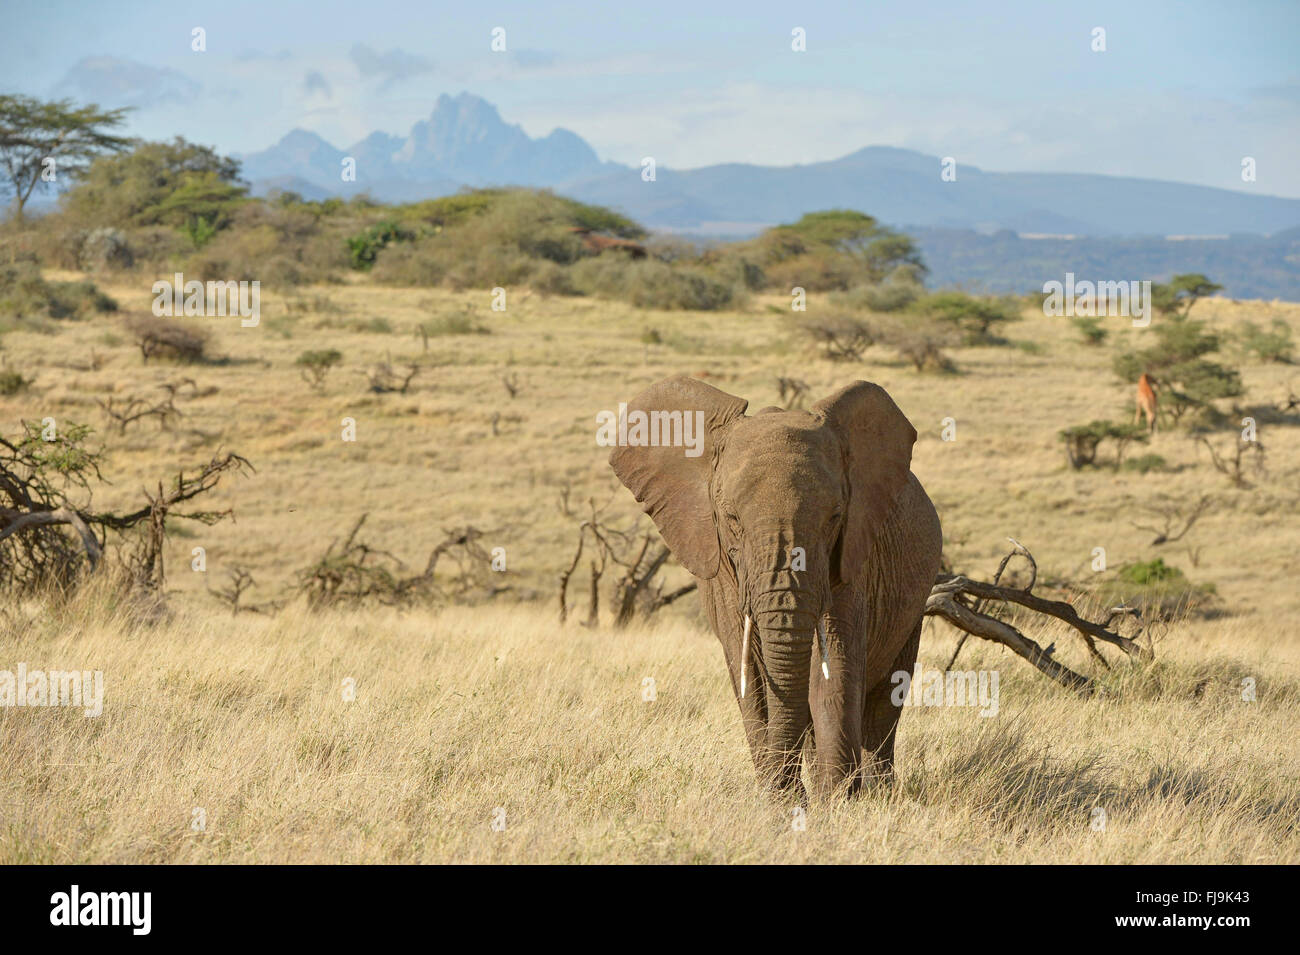 African Elephant (Loxodonta africana) walking in environment, with Mount Kenya in background, Lewa Wildlife Conservancy, Kenya, Stock Photo